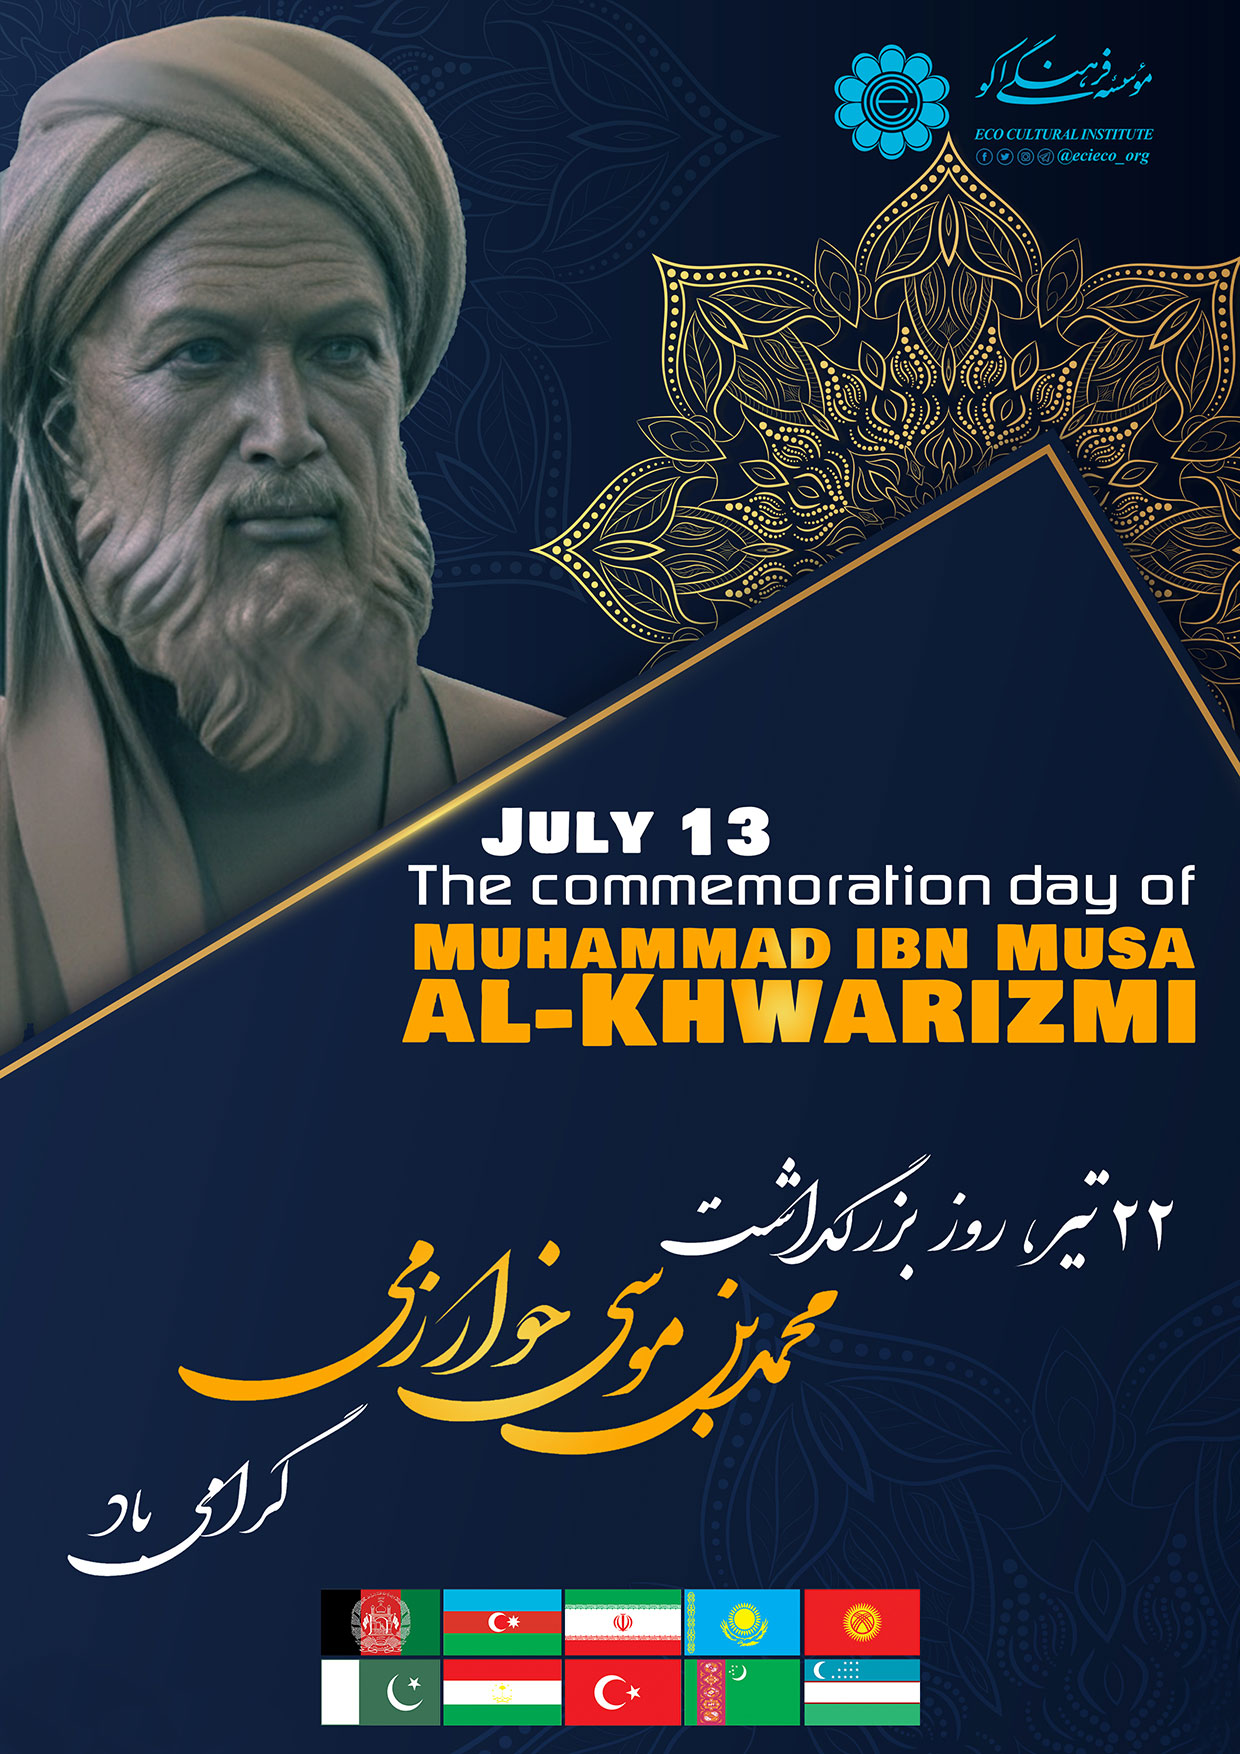 July 13, the commemoration day of Muhammad ibn Musa Al-Khwarizmi